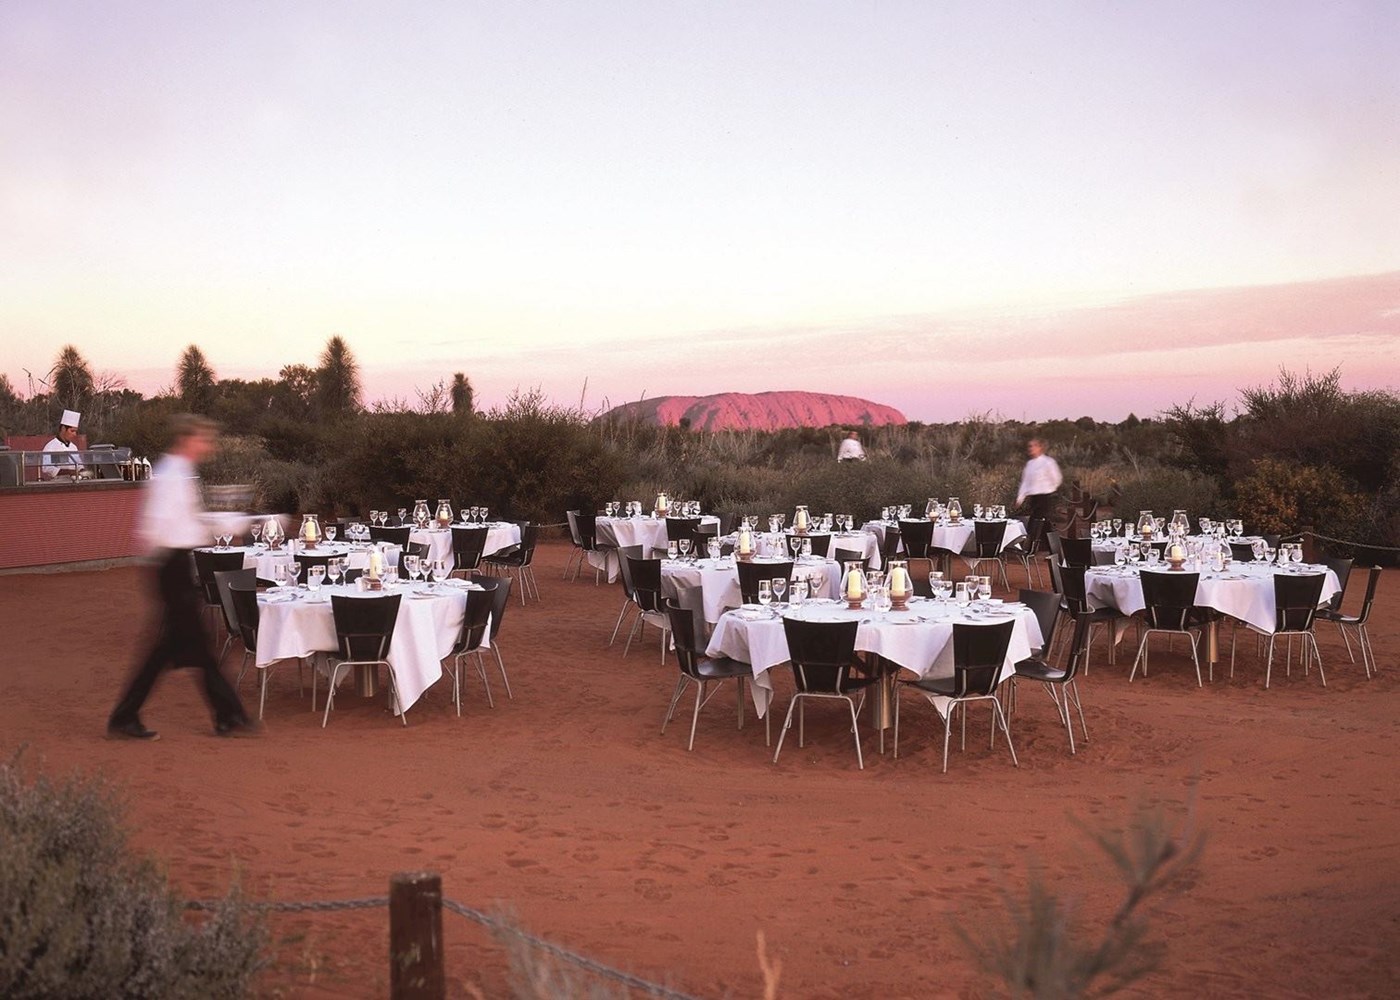 Sounds of Silence Uluru